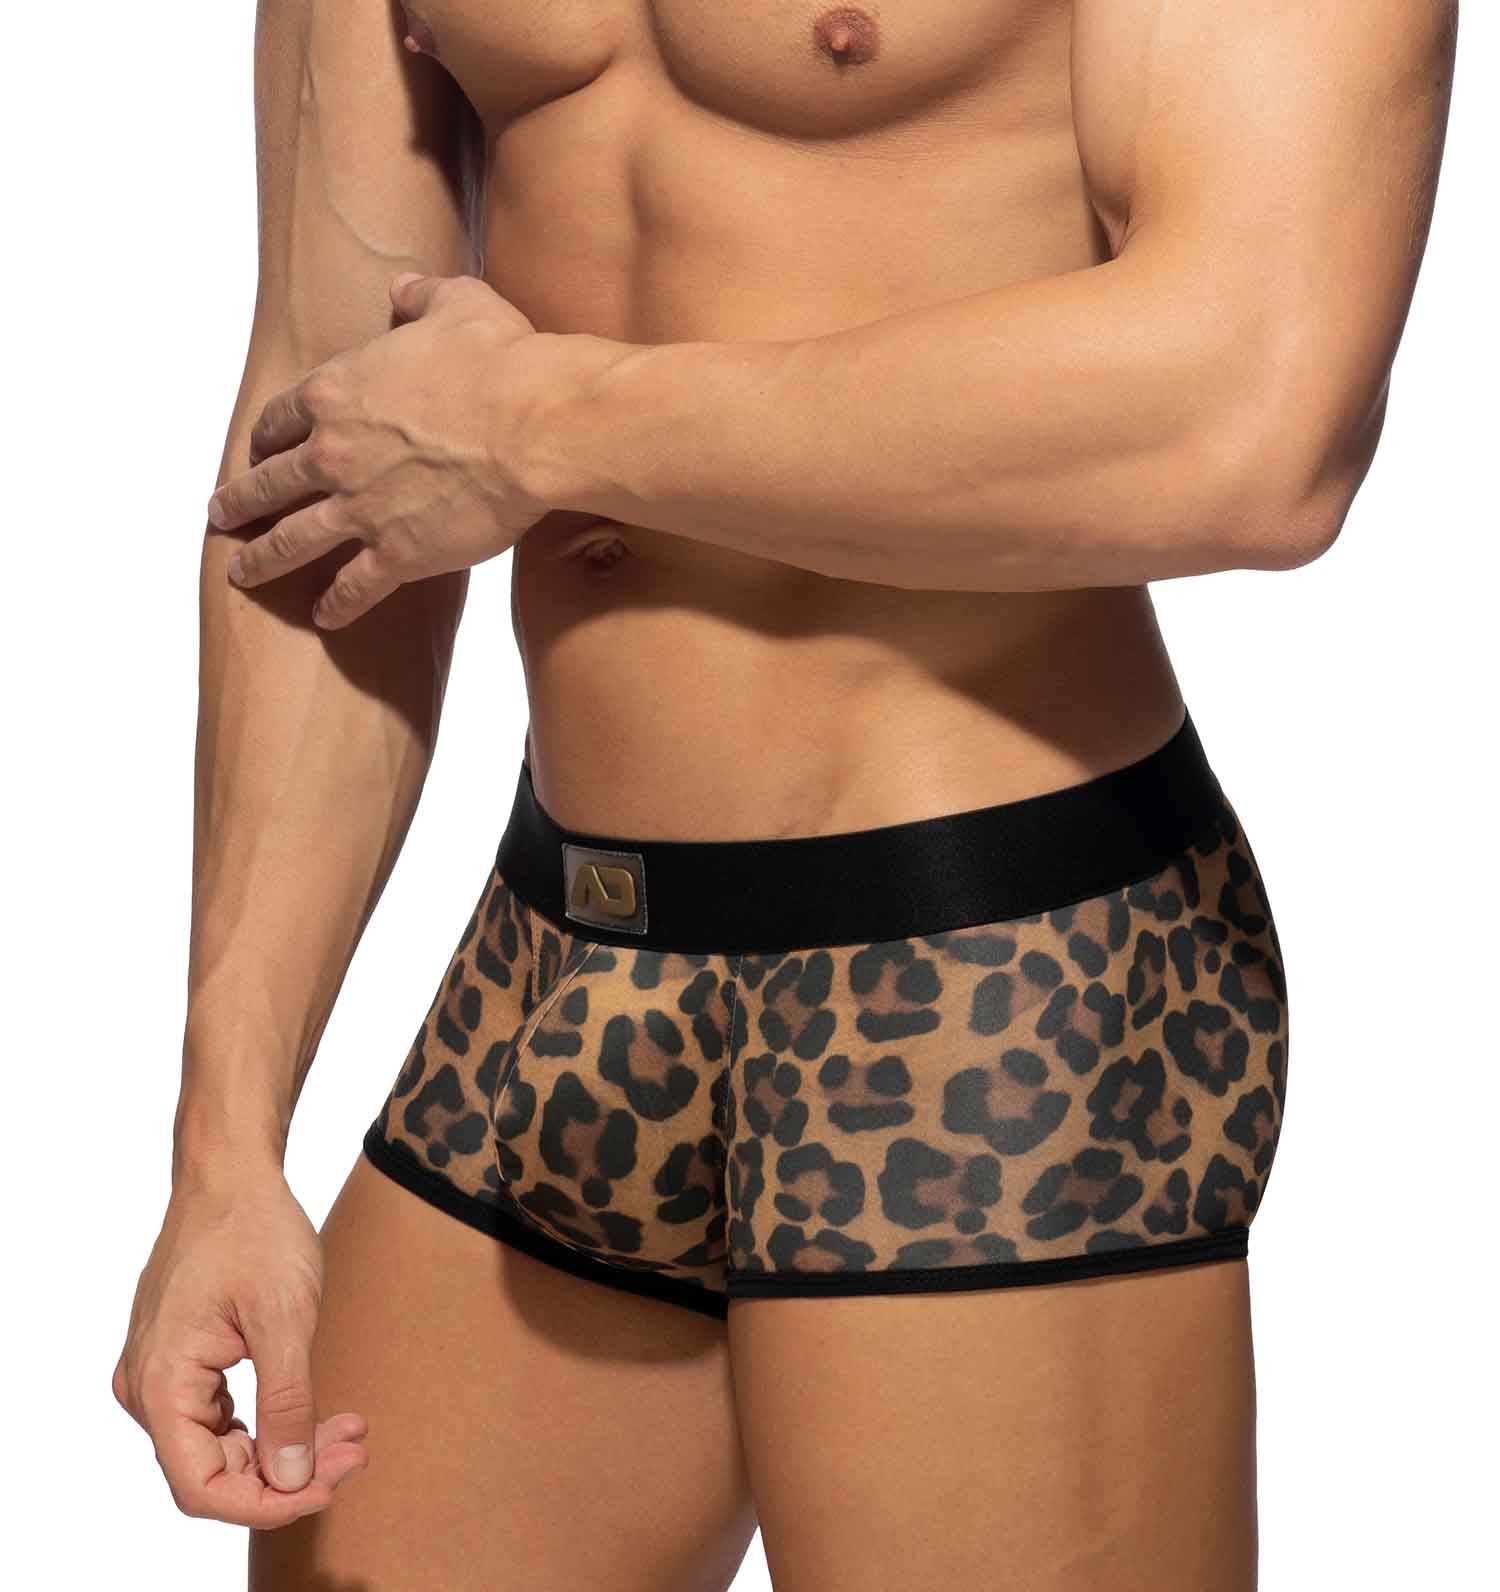 Addicted Boxershorts im Leopard Print